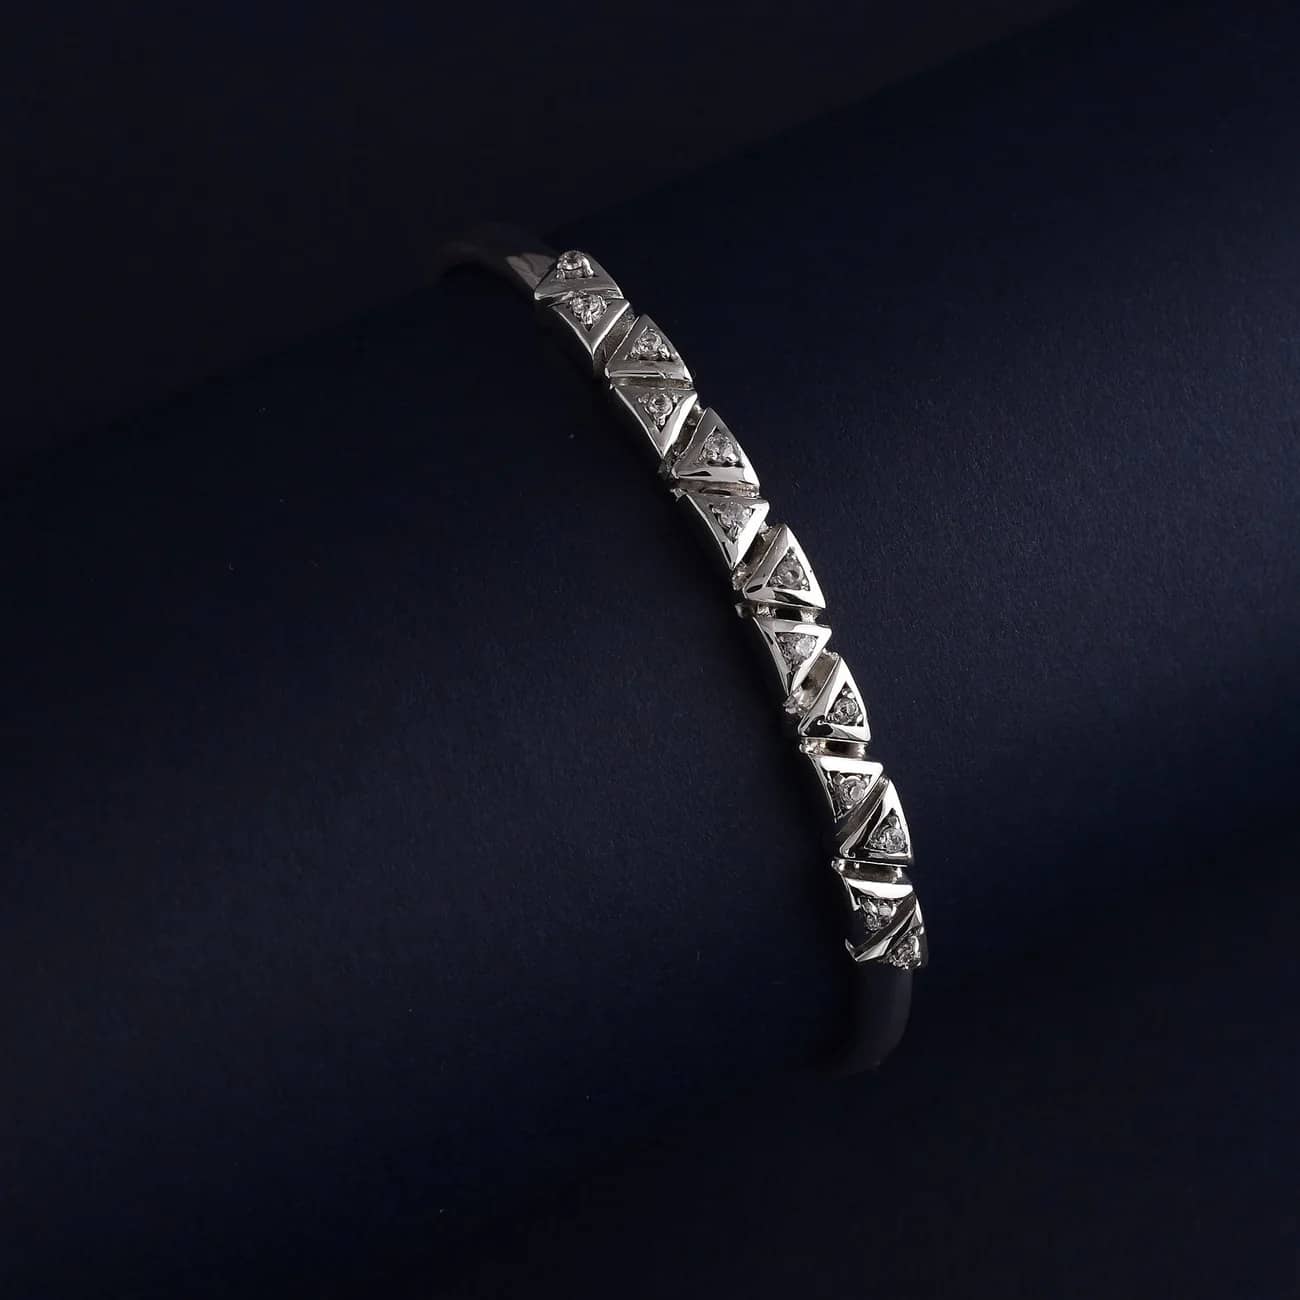 Triangular Design Cz Silver Bracelet - Finding the Perfect Rakhi Gift for Sister